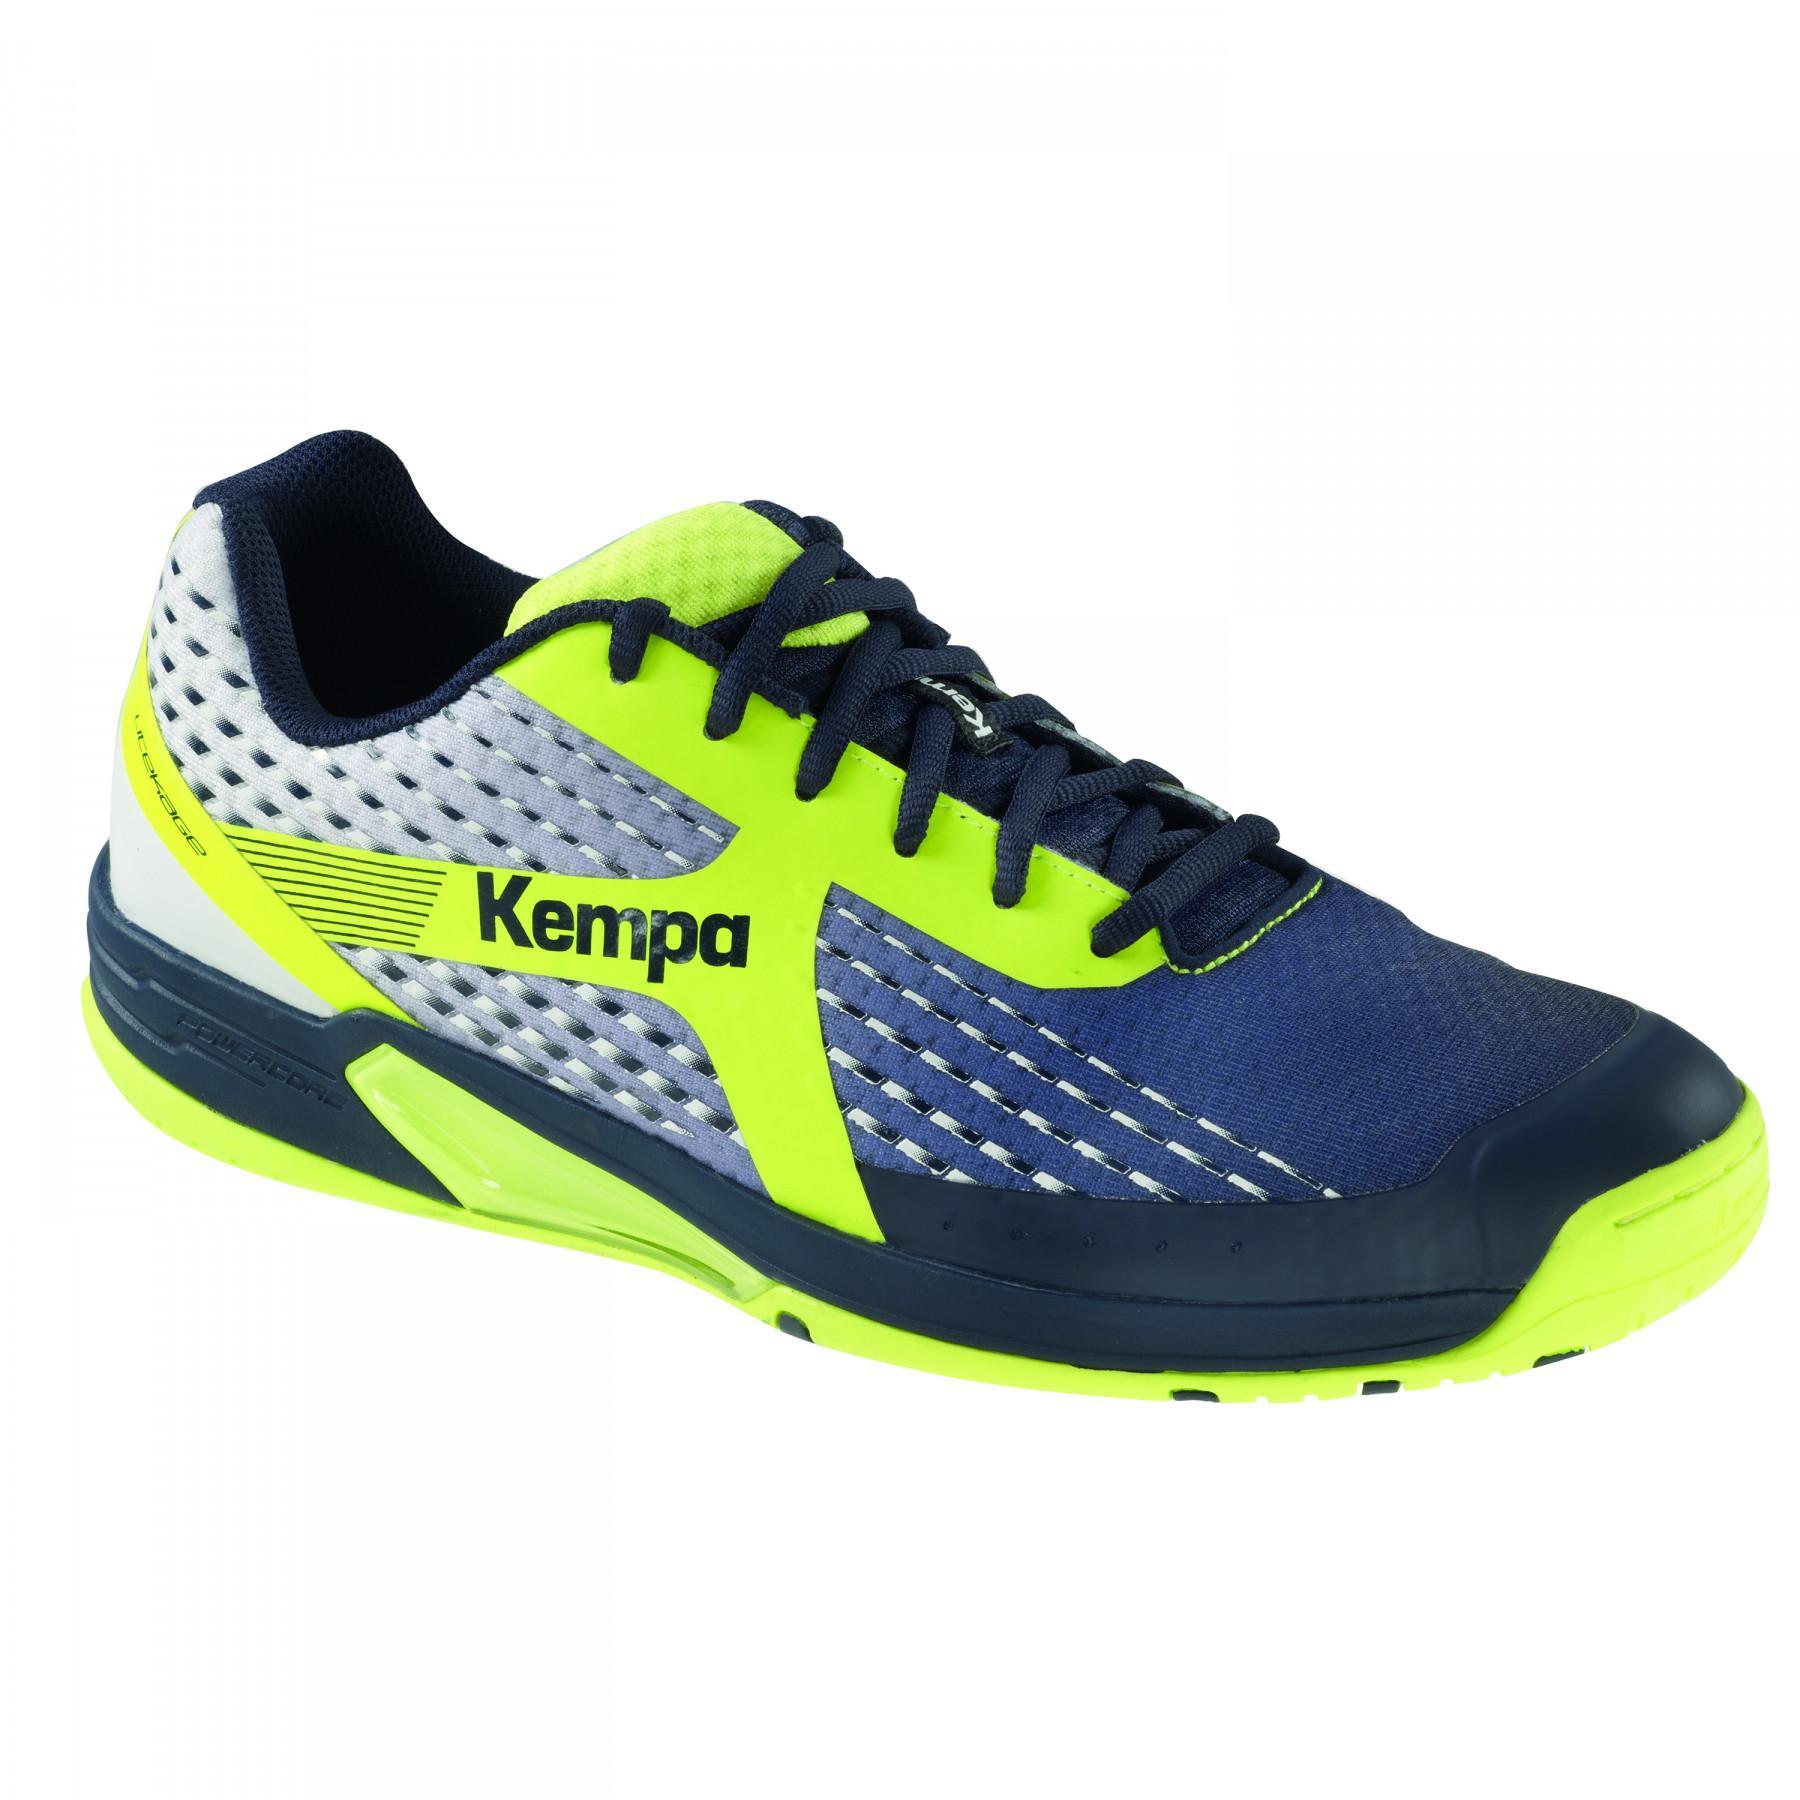 Shoes Kempa Wing